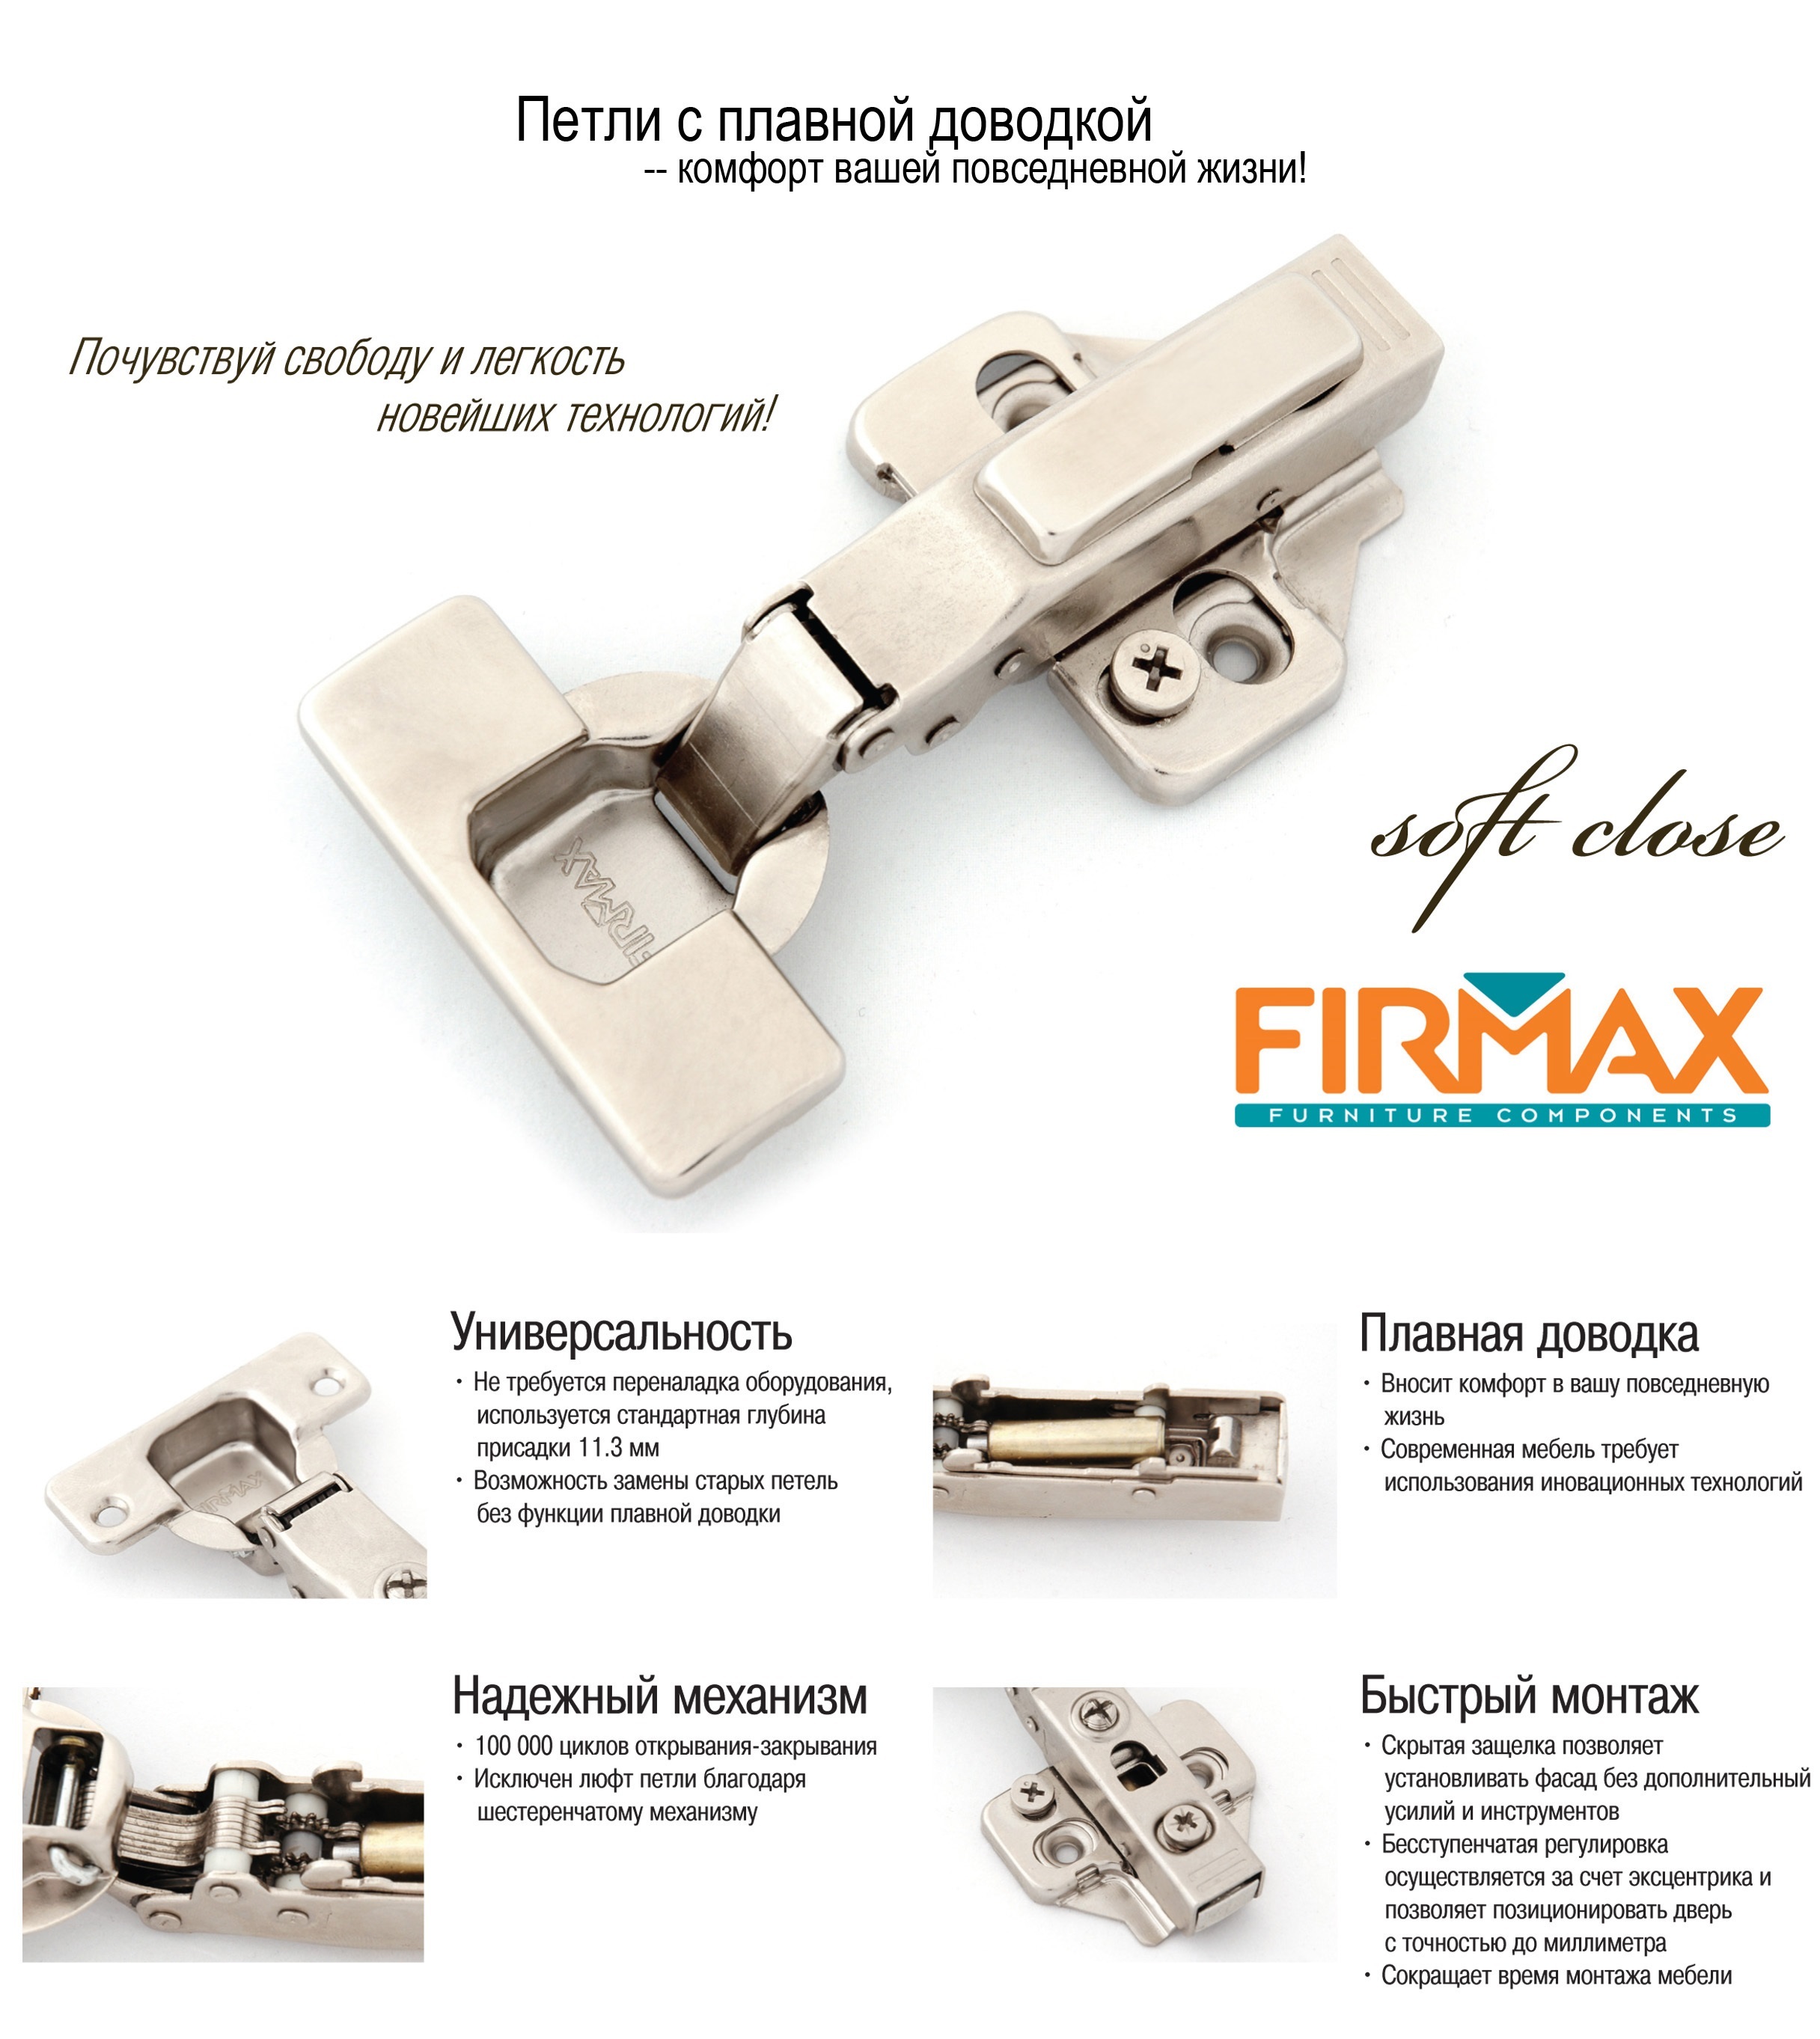 Firmax Advanced петли